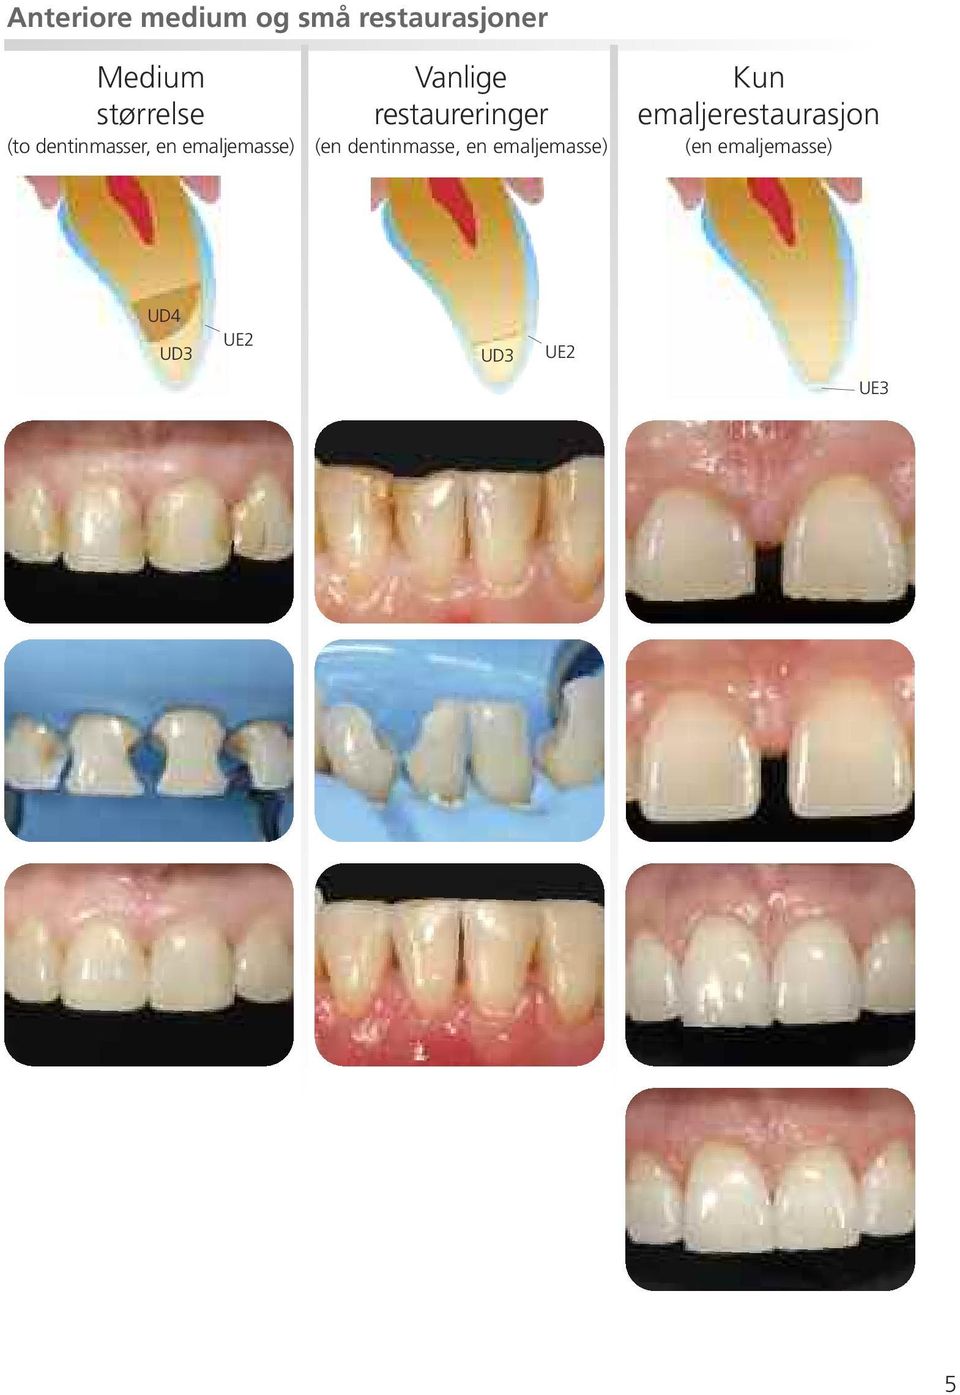 Vanlige restaureringer (en dentinmasse, en